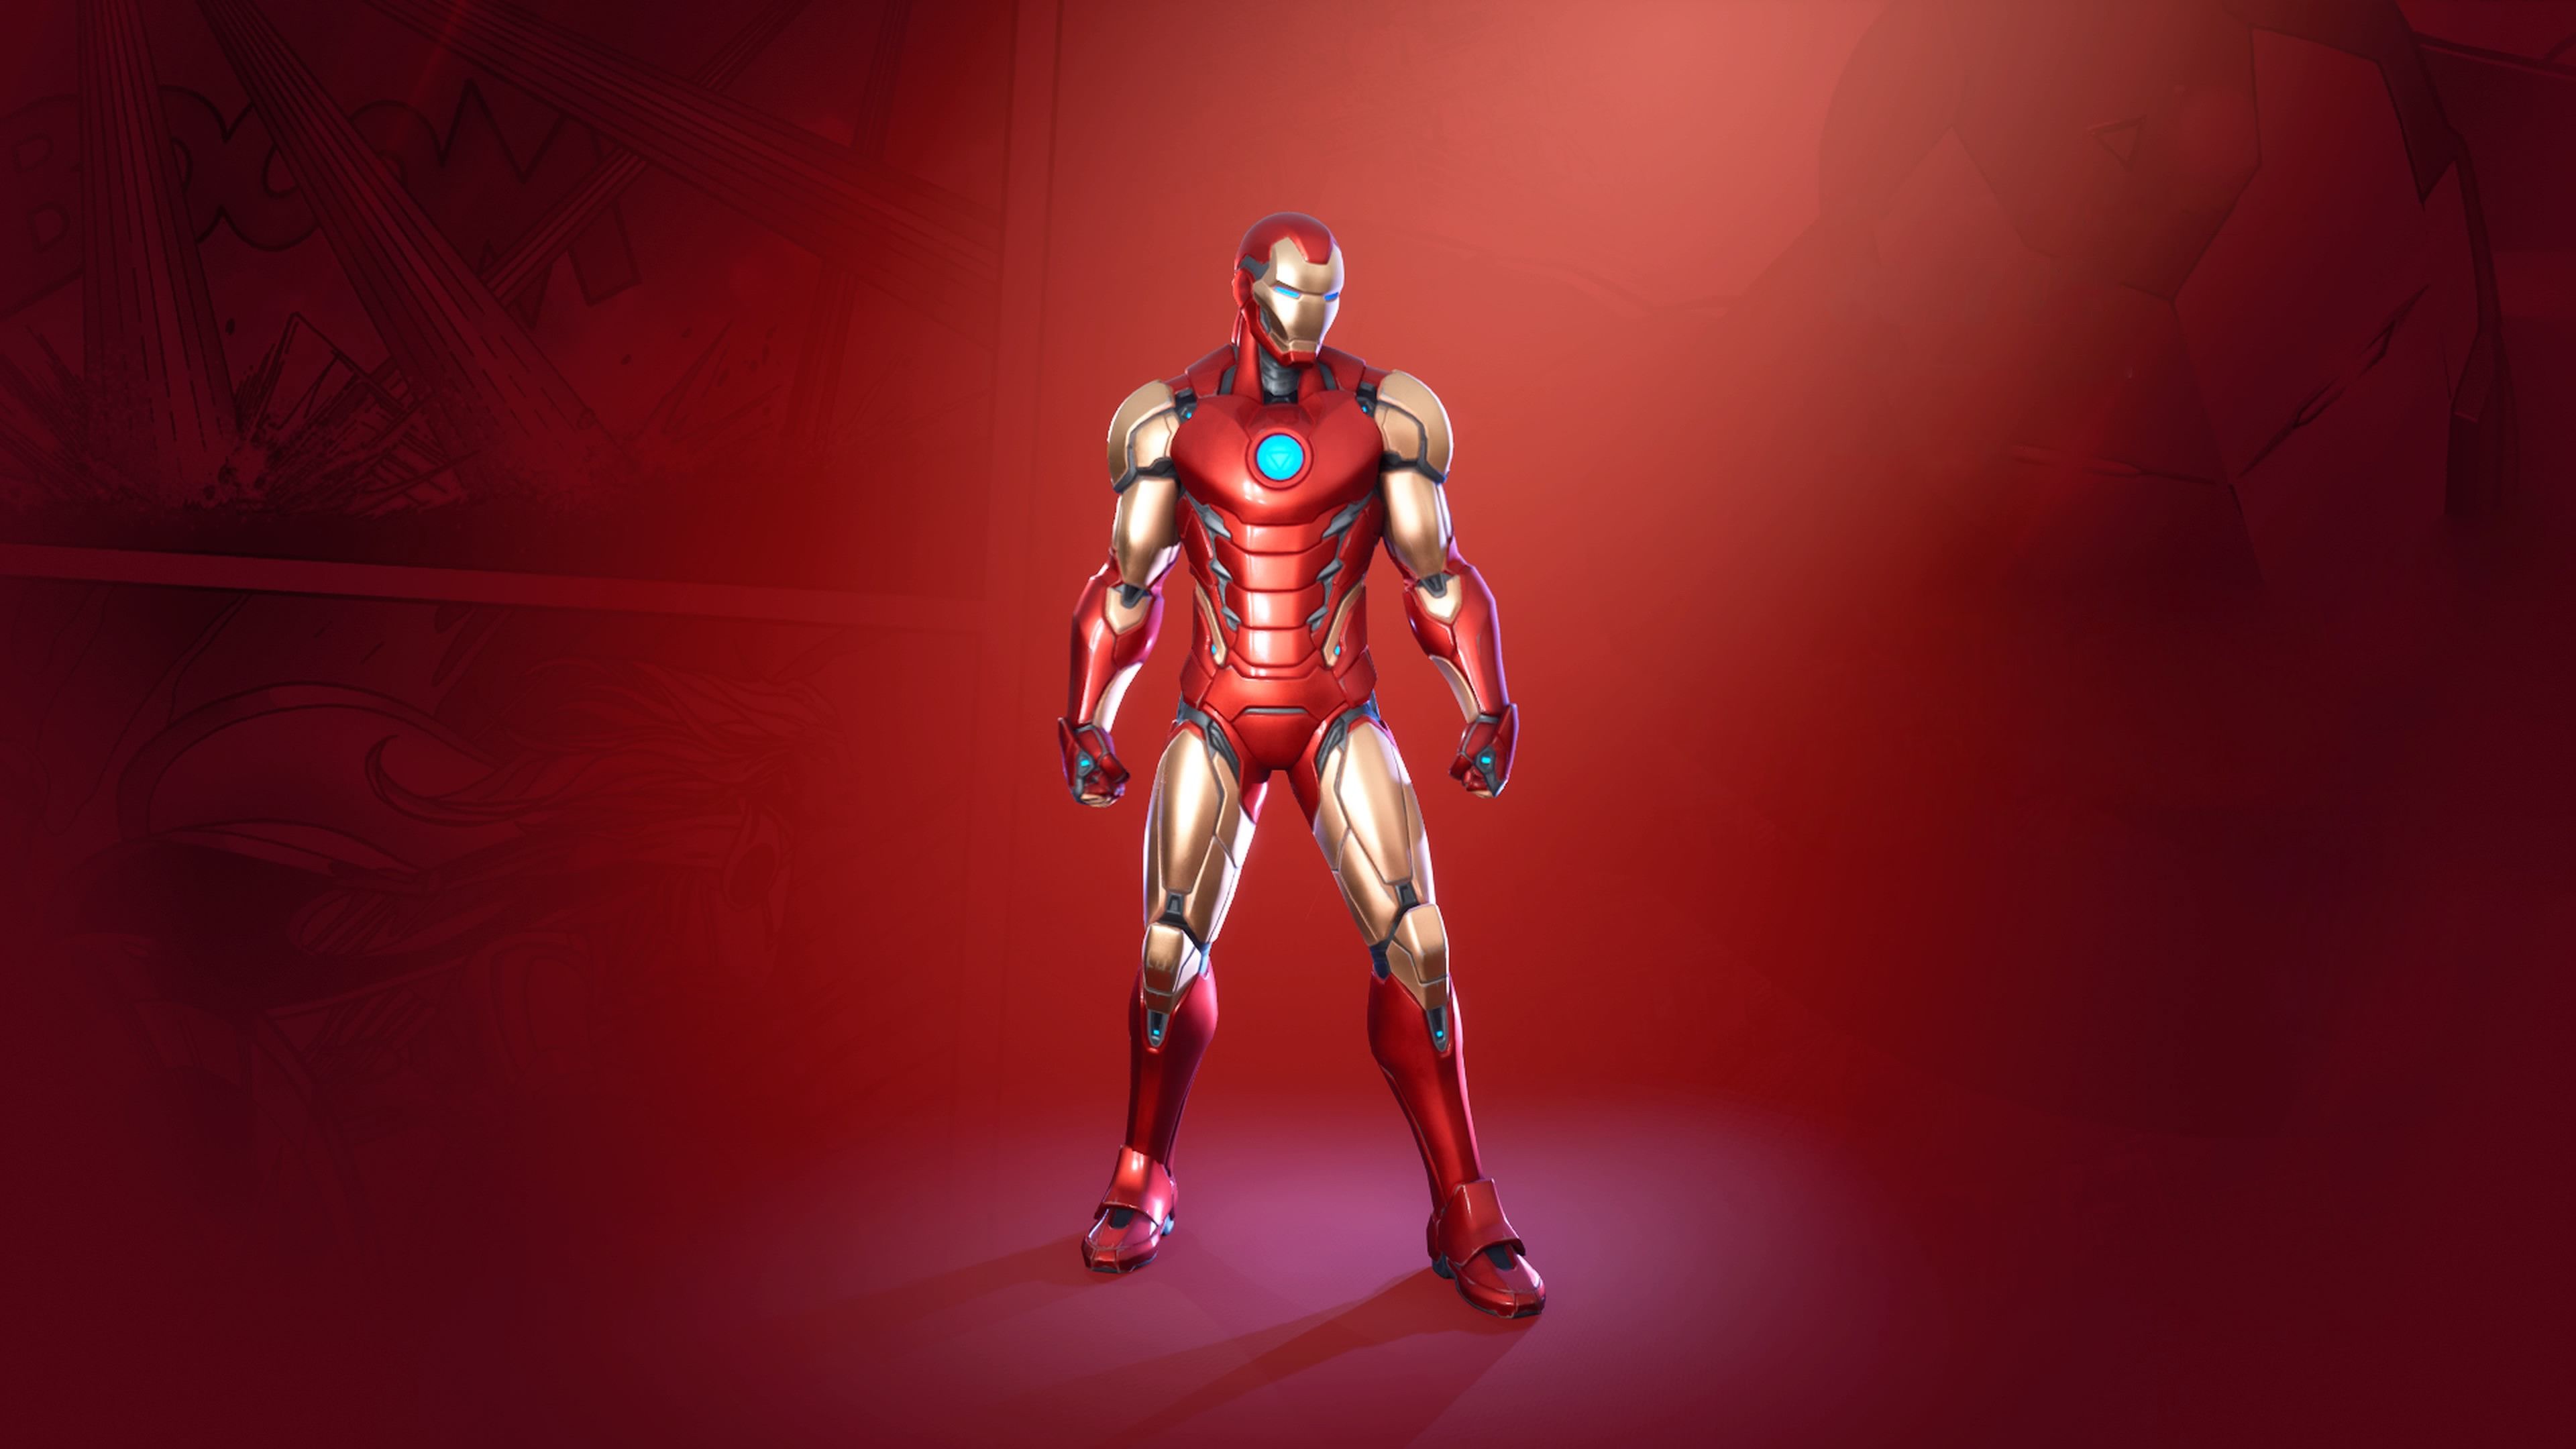 Iron Man Fortnite Season 4 Wallpaper, HD Games 4K Wallpaper, Image, Photo and Background